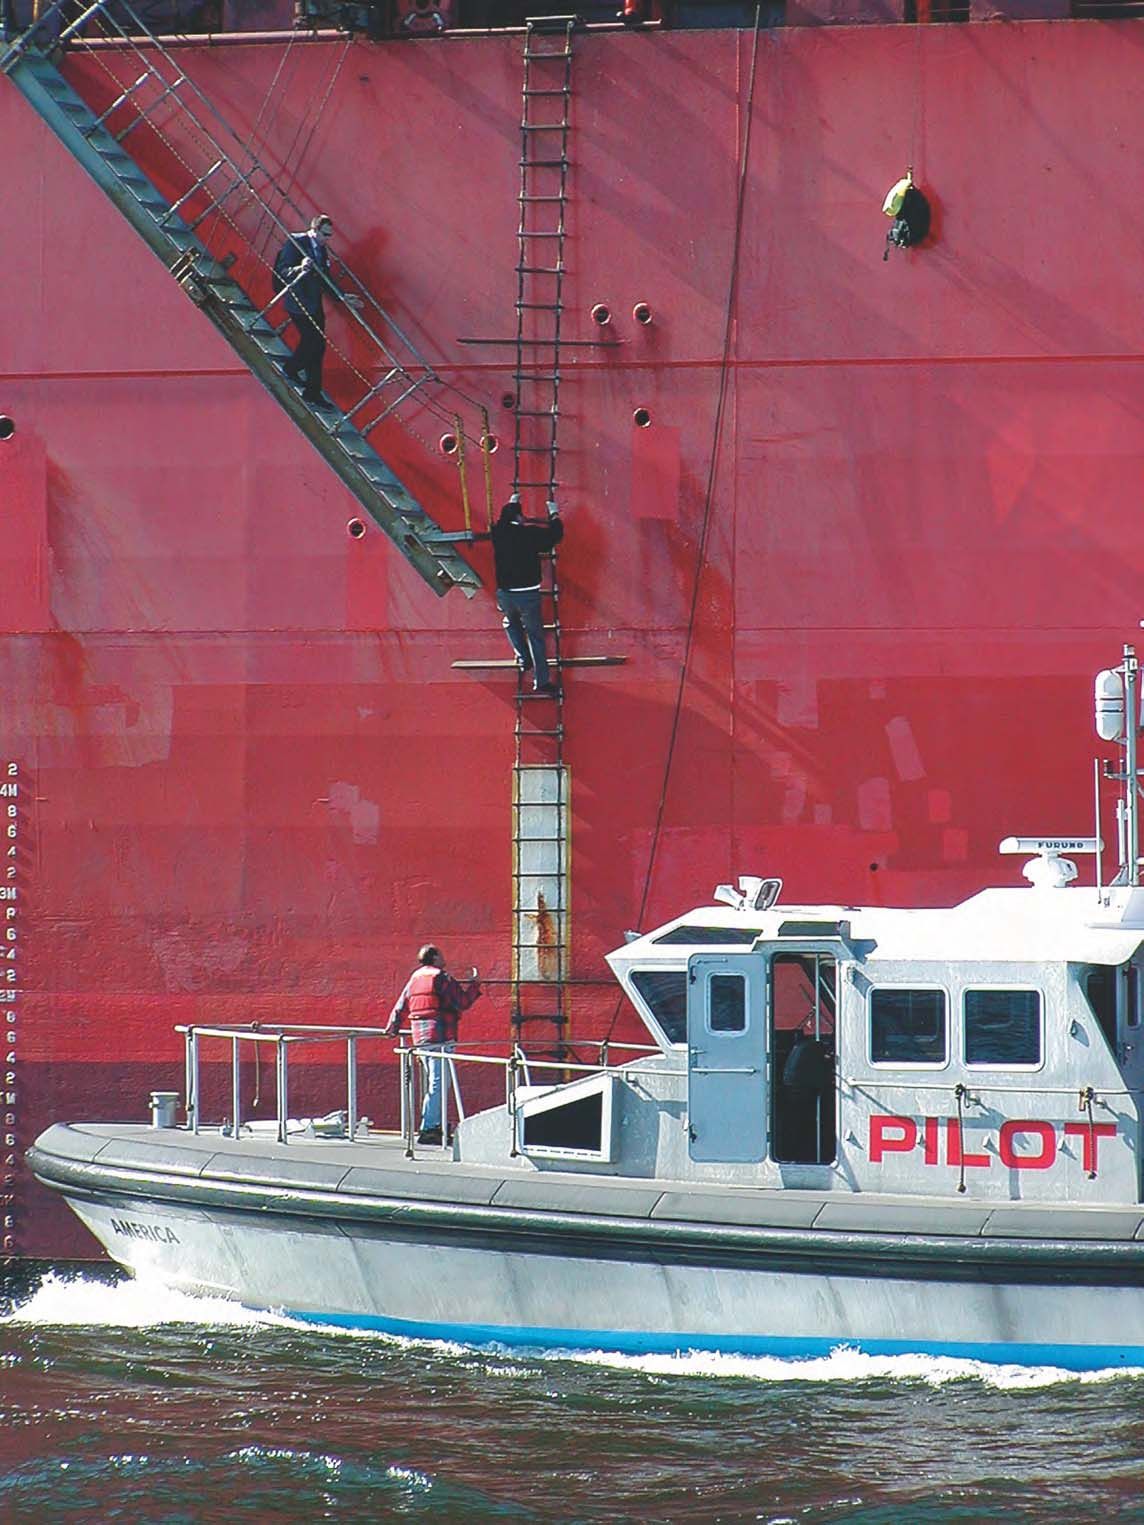 Pilot climbing aboard a ship